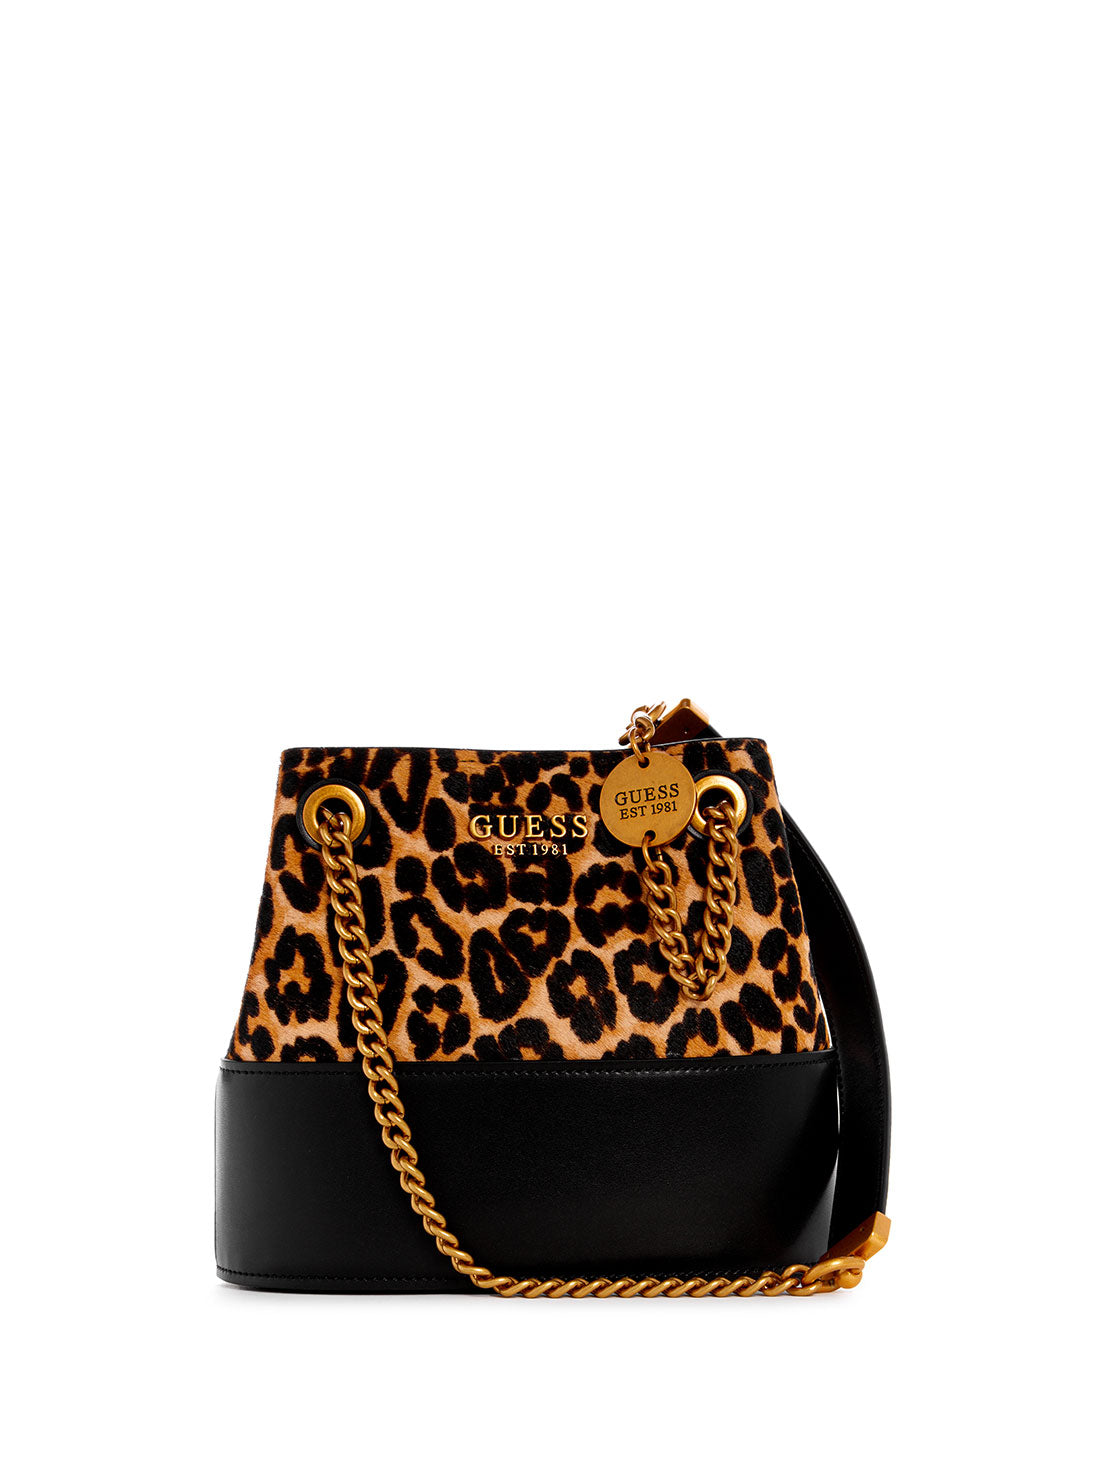 GUESS Women's Leopard Iseline Bucket Bag LH896001 Front View